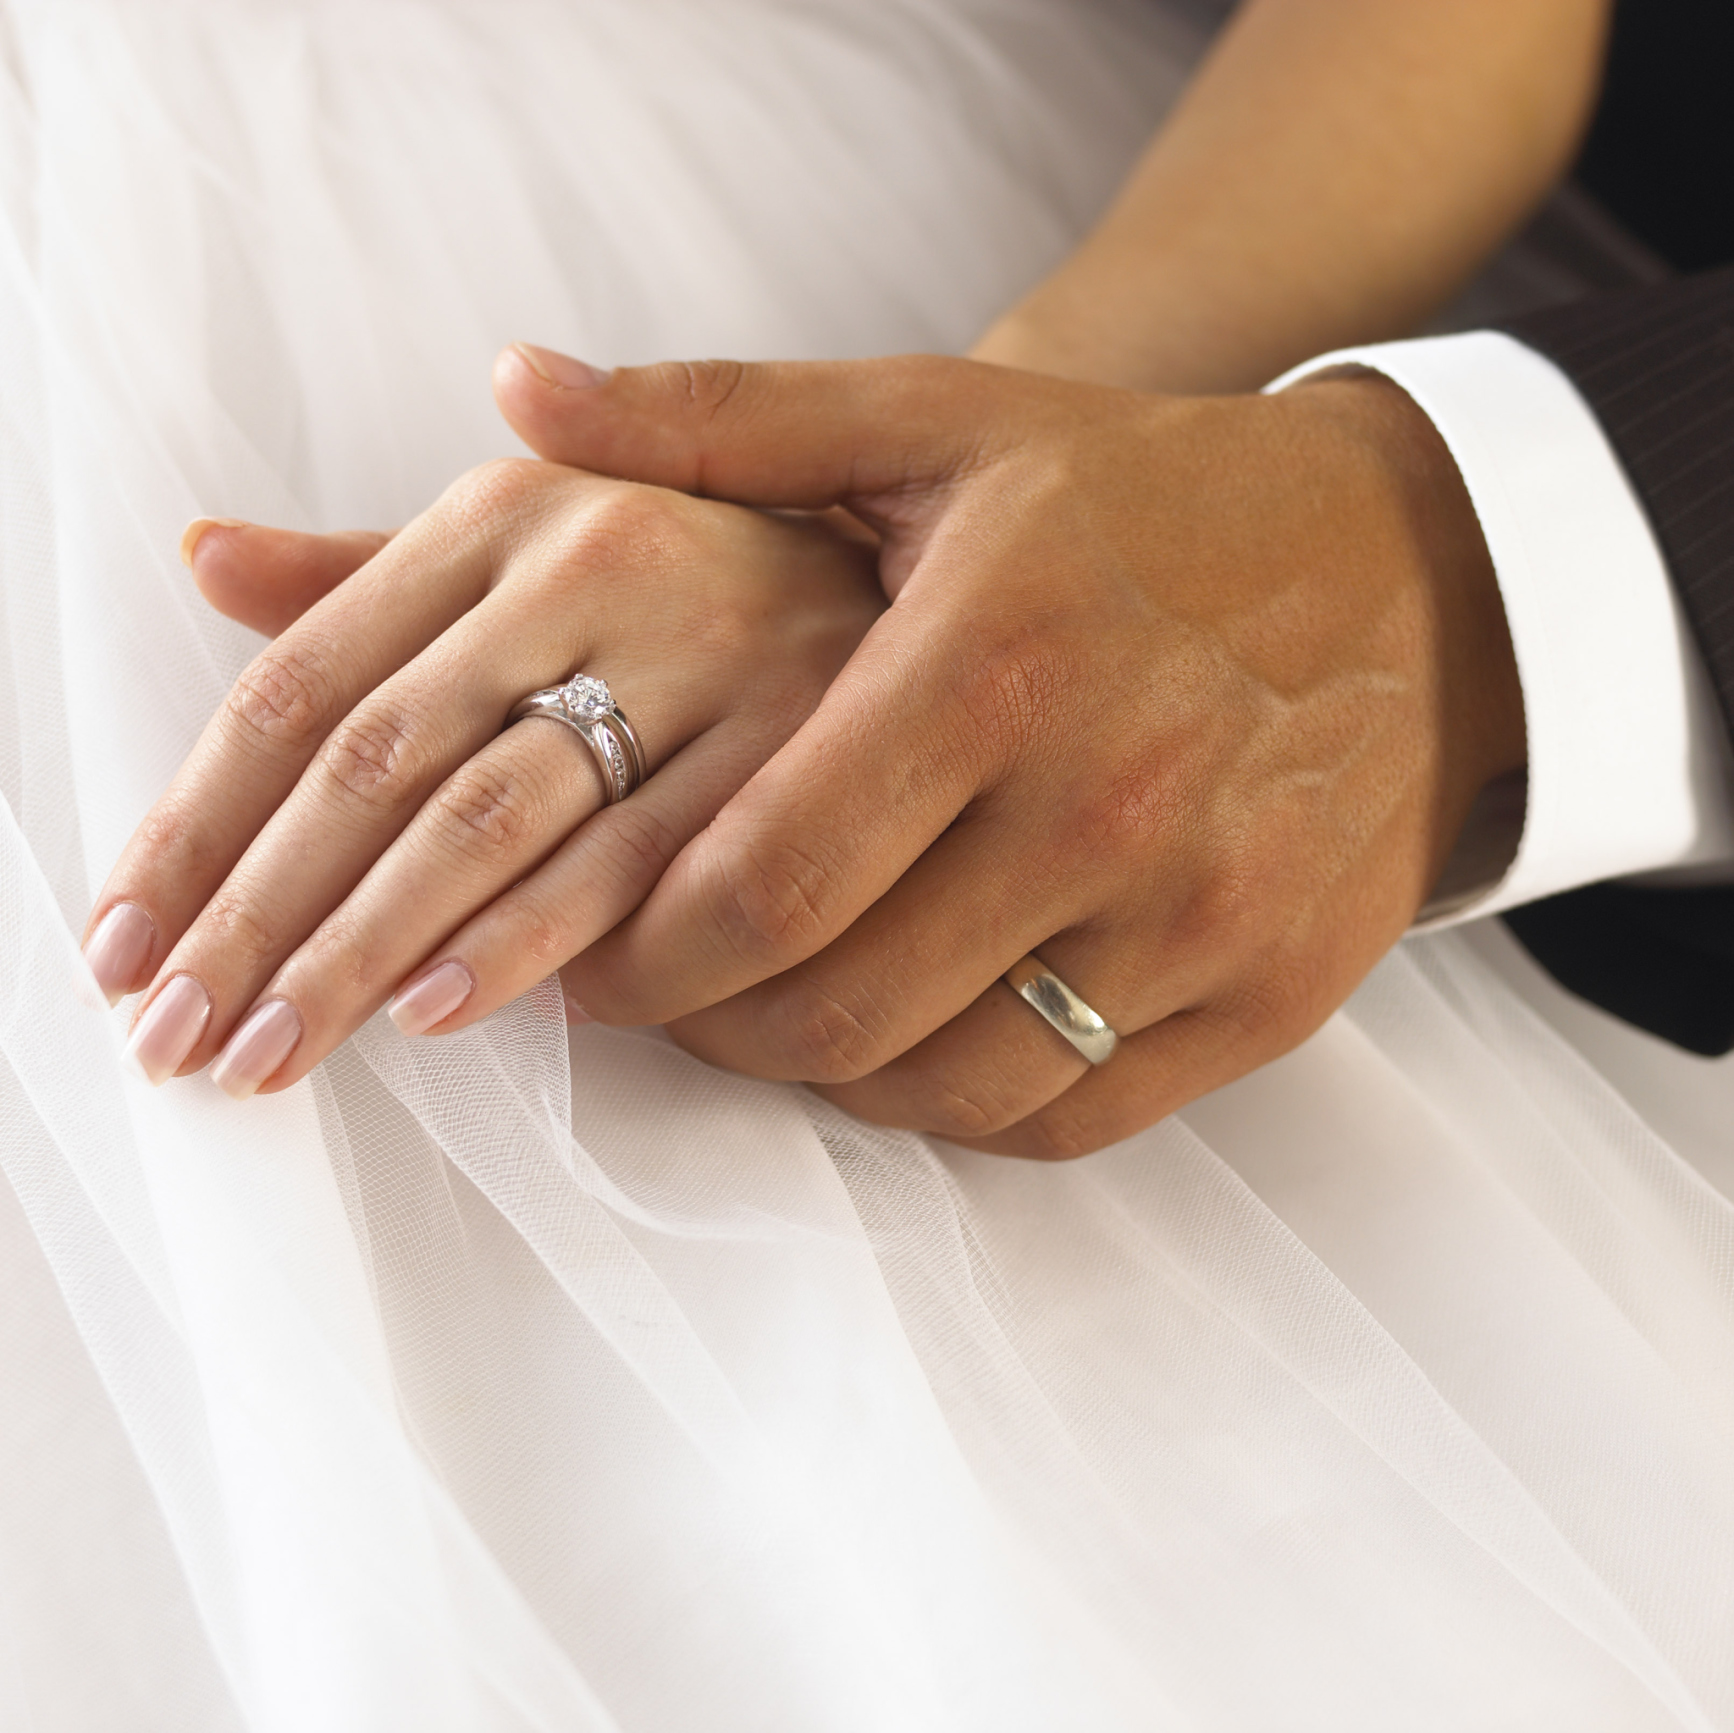 Wear ring before wedding